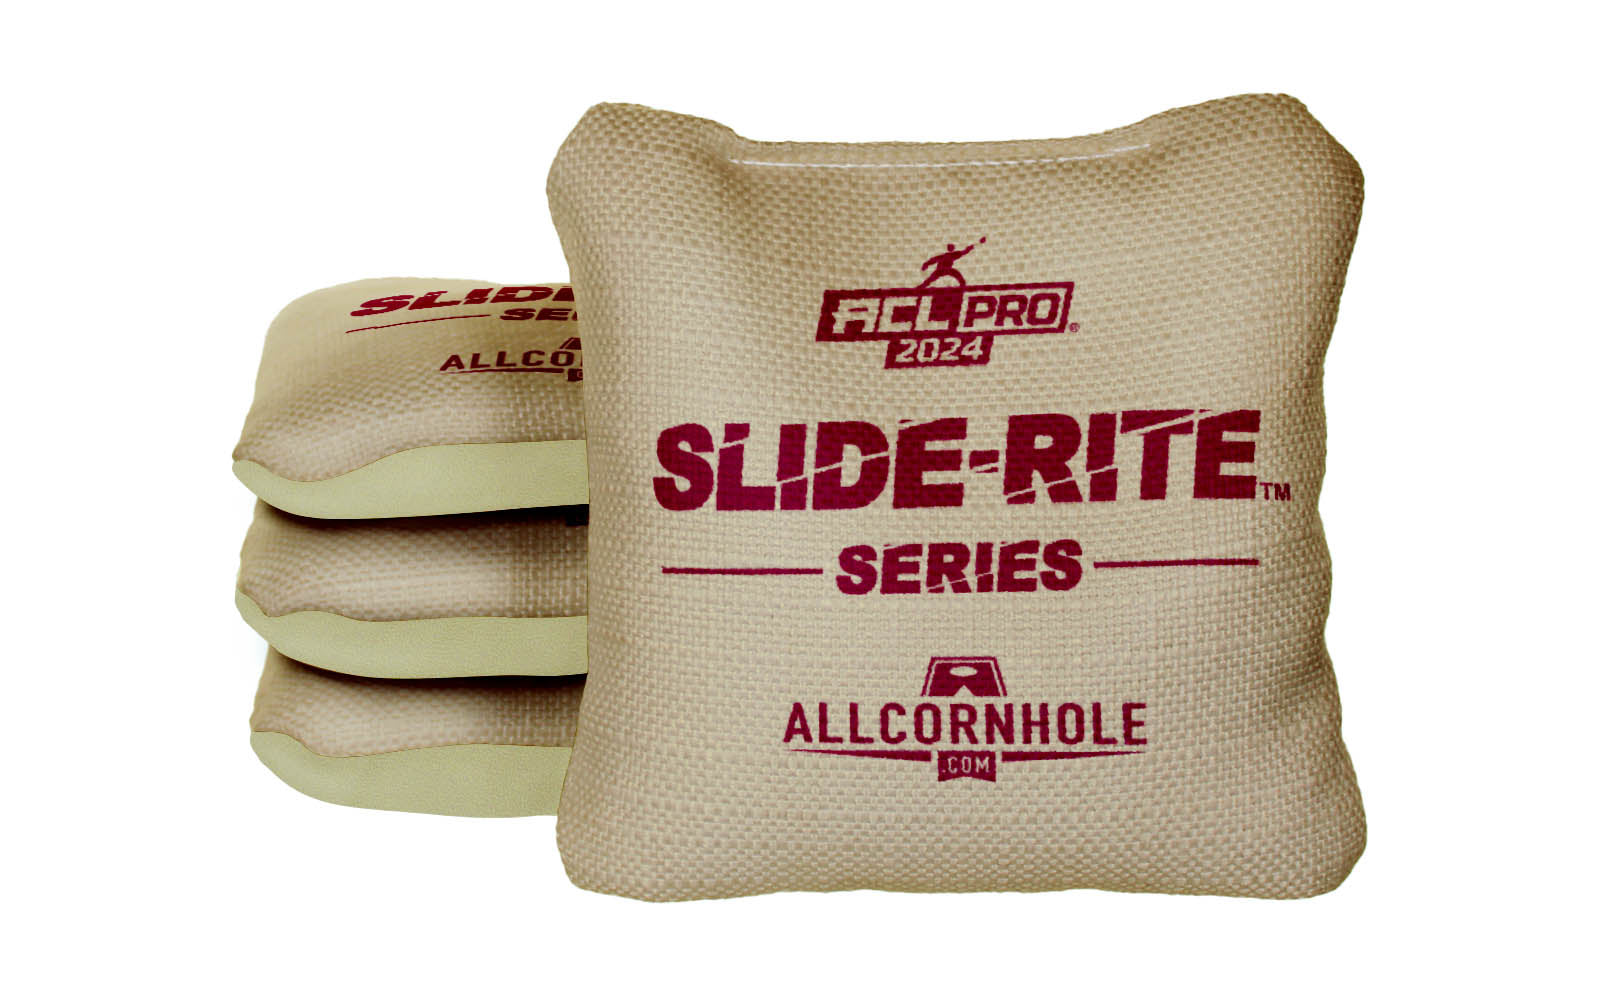 Officially Licensed Collegiate Cornhole Bags - Slide Rite - Set of 4 - Florida State University